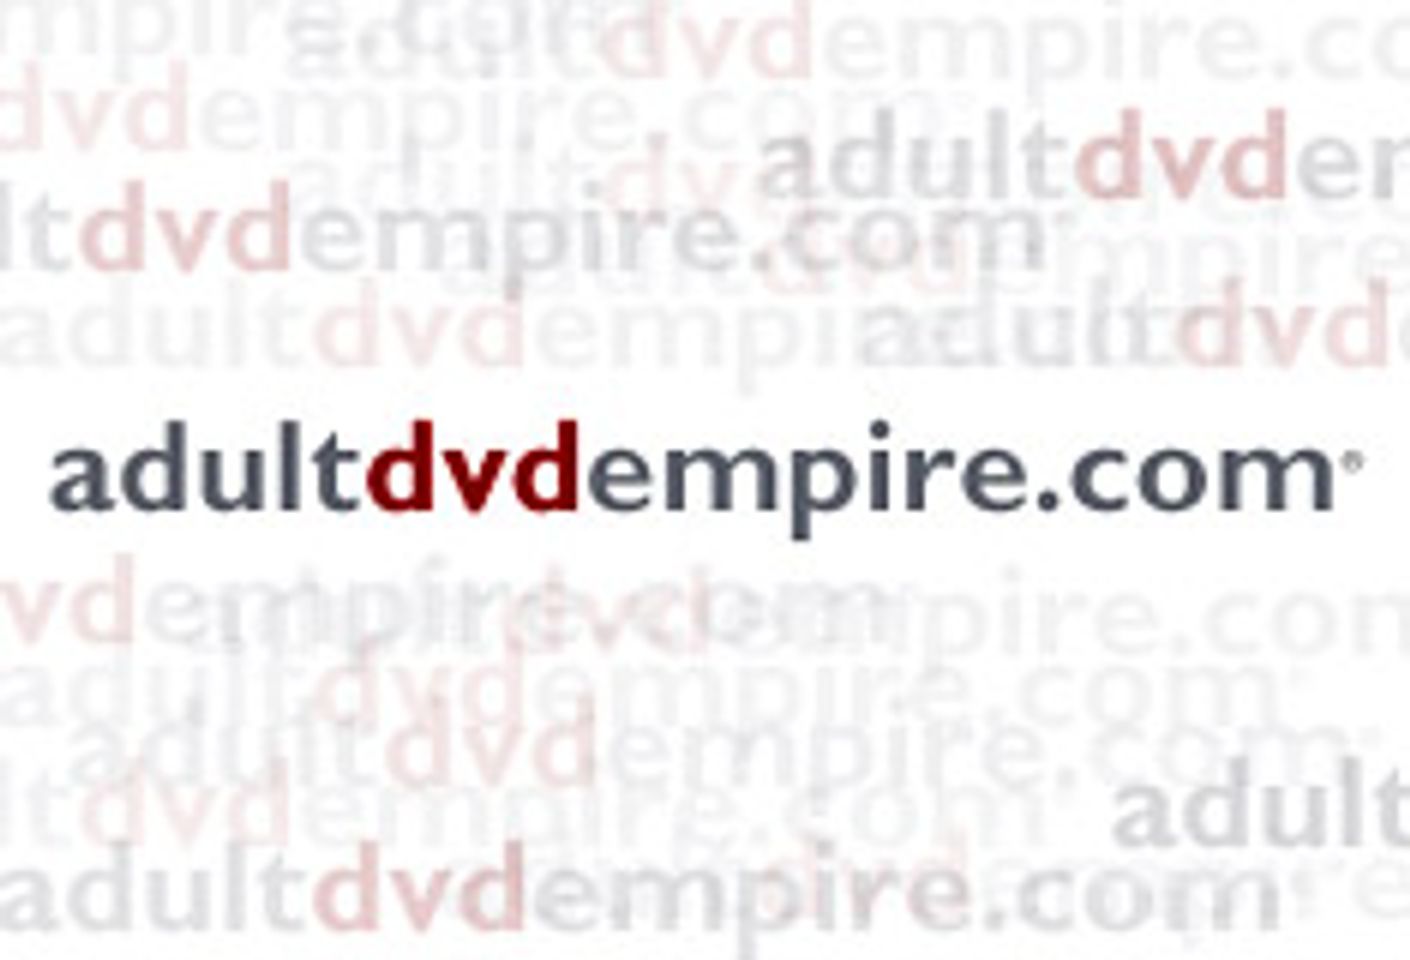 Adult DVD Empire Announces 2006 Empire Awards Nominees